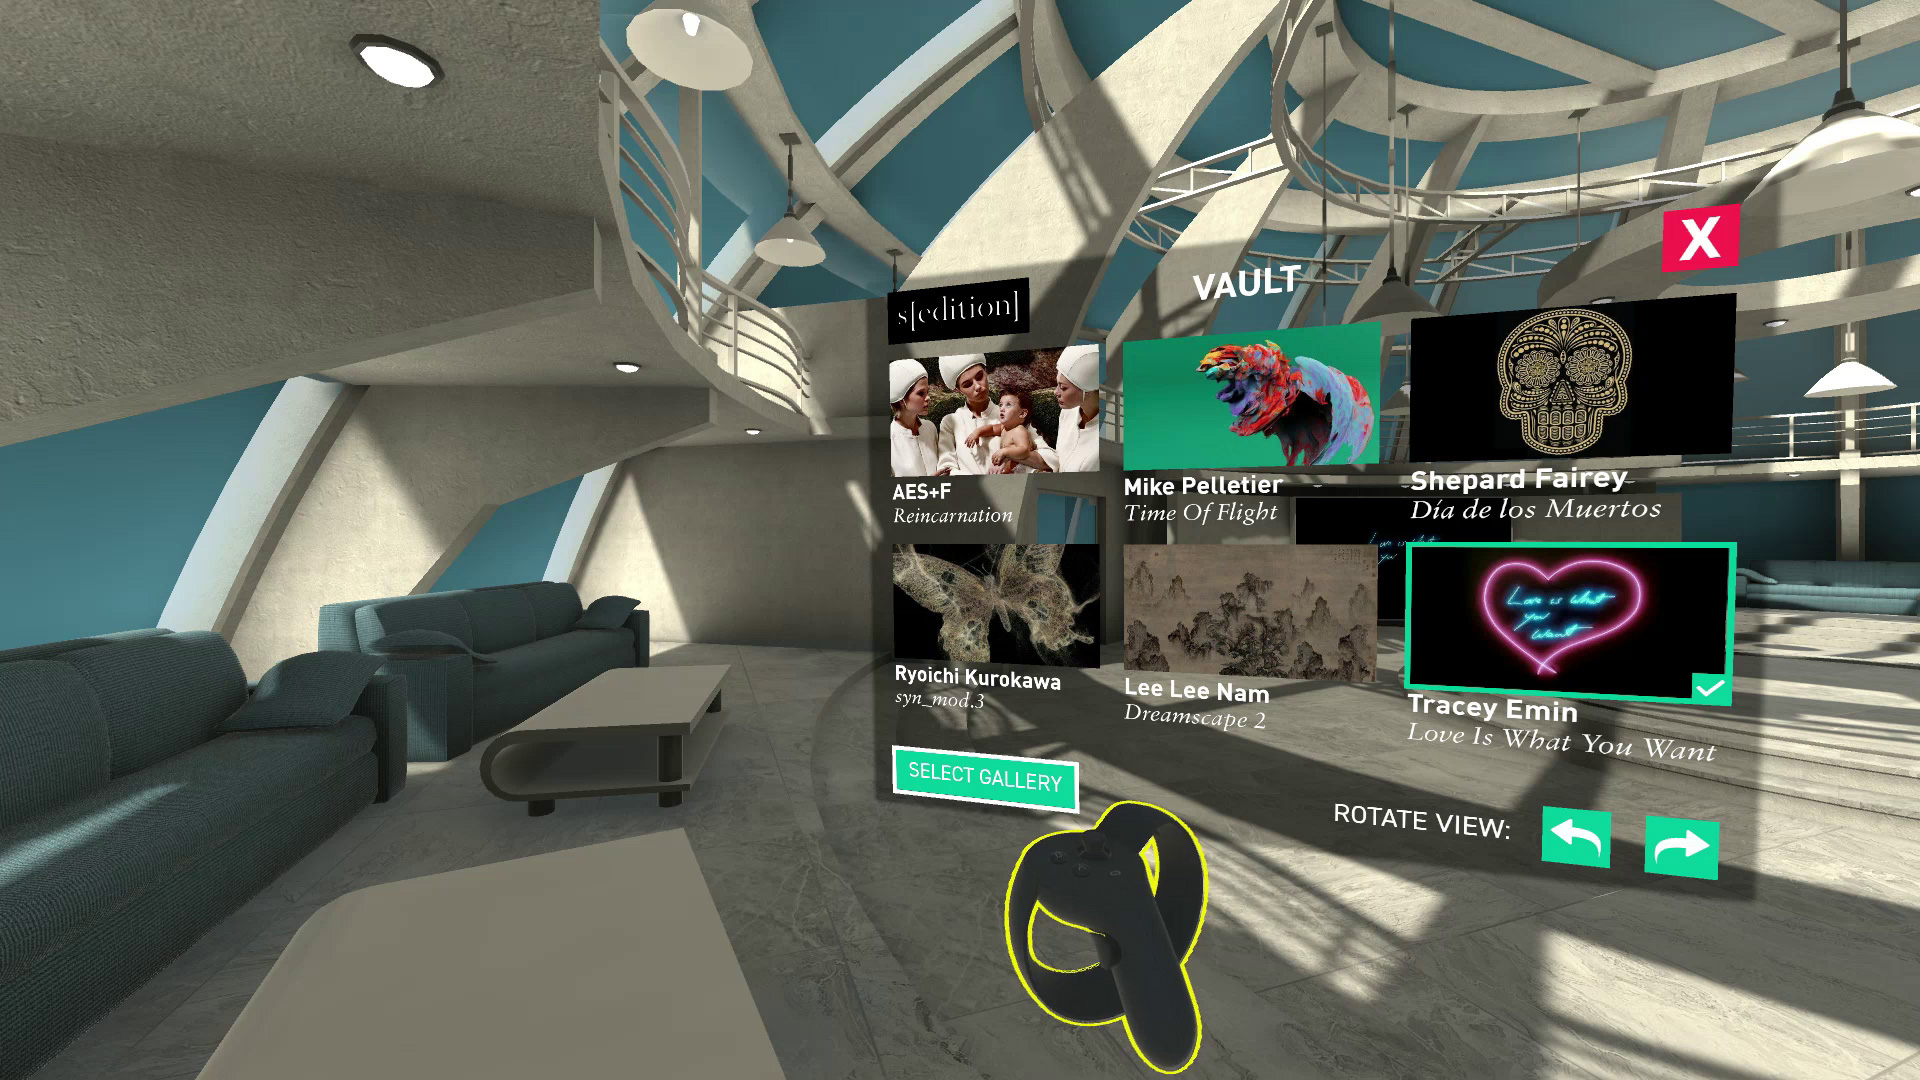 Screenshot from Sedition VR showroom environment showing navigation UI